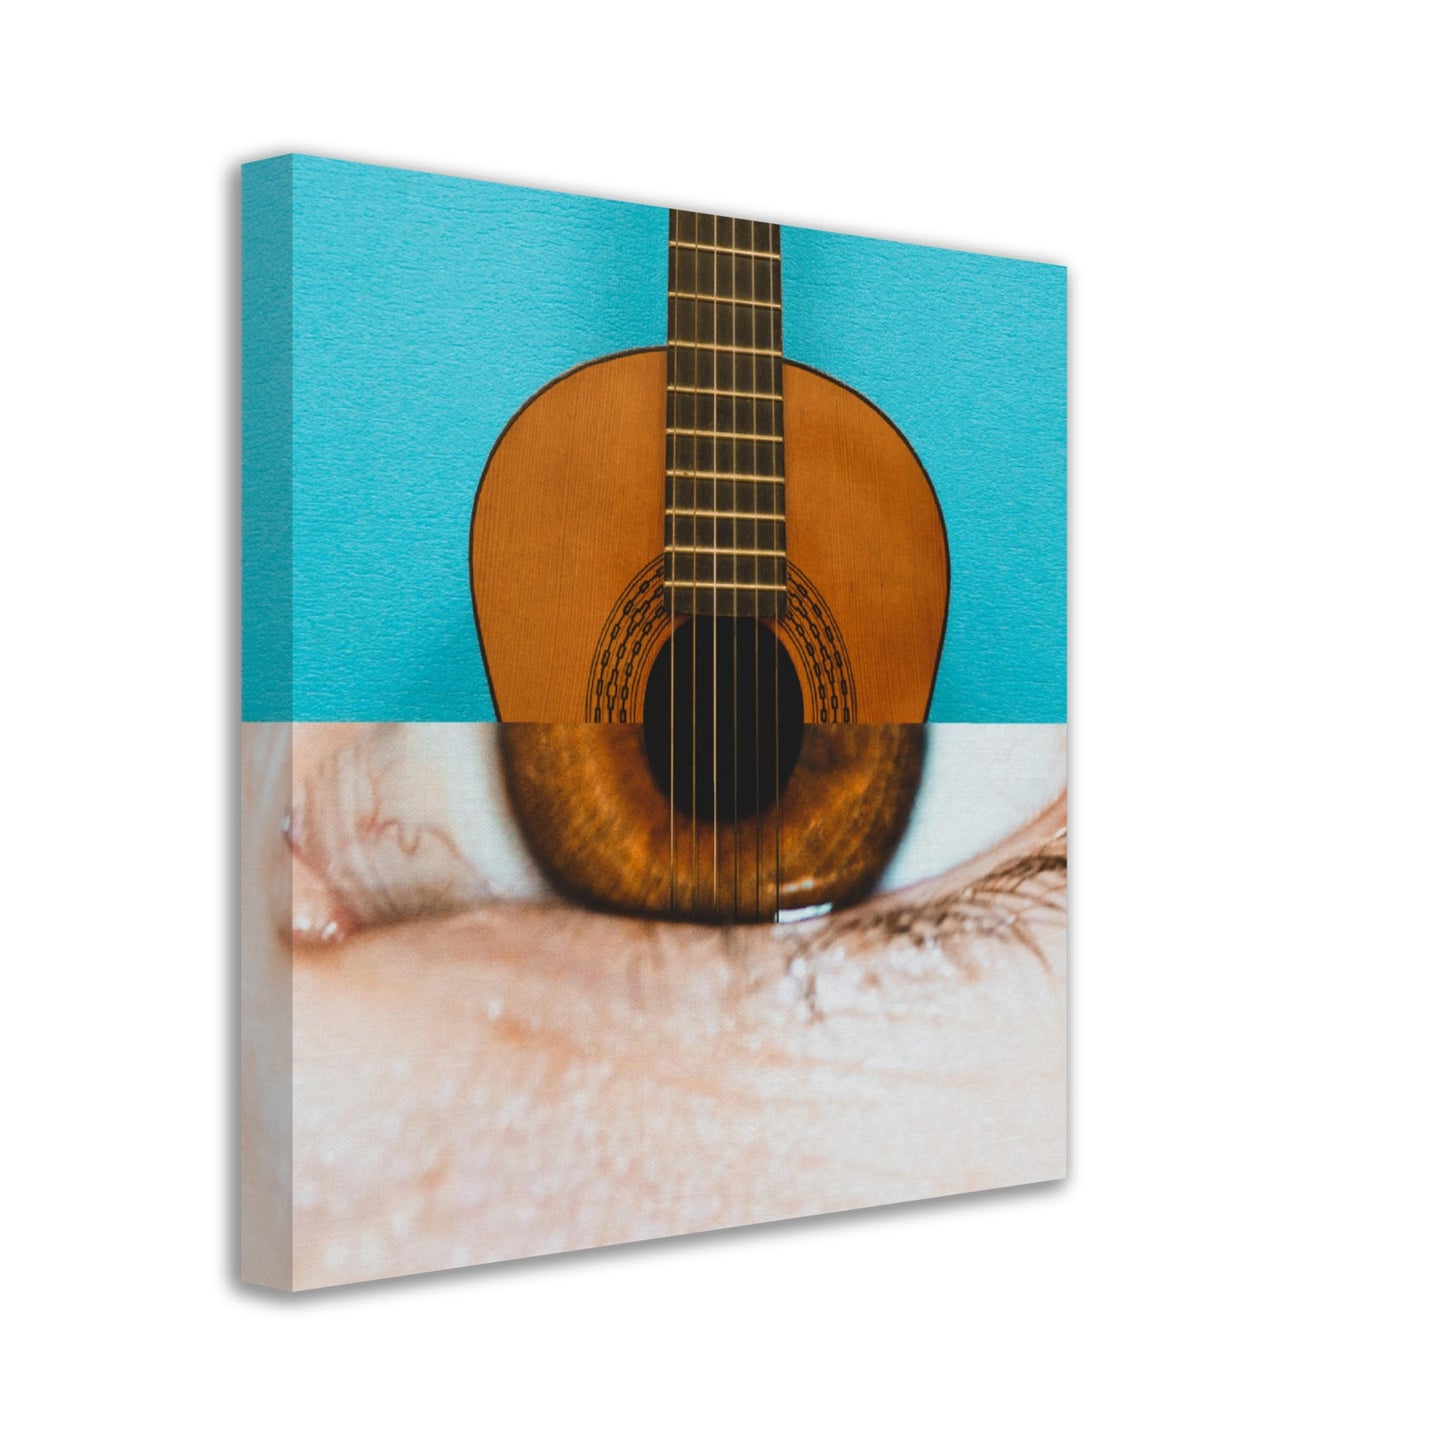 Eye-coustic Guitar - Canvas Print